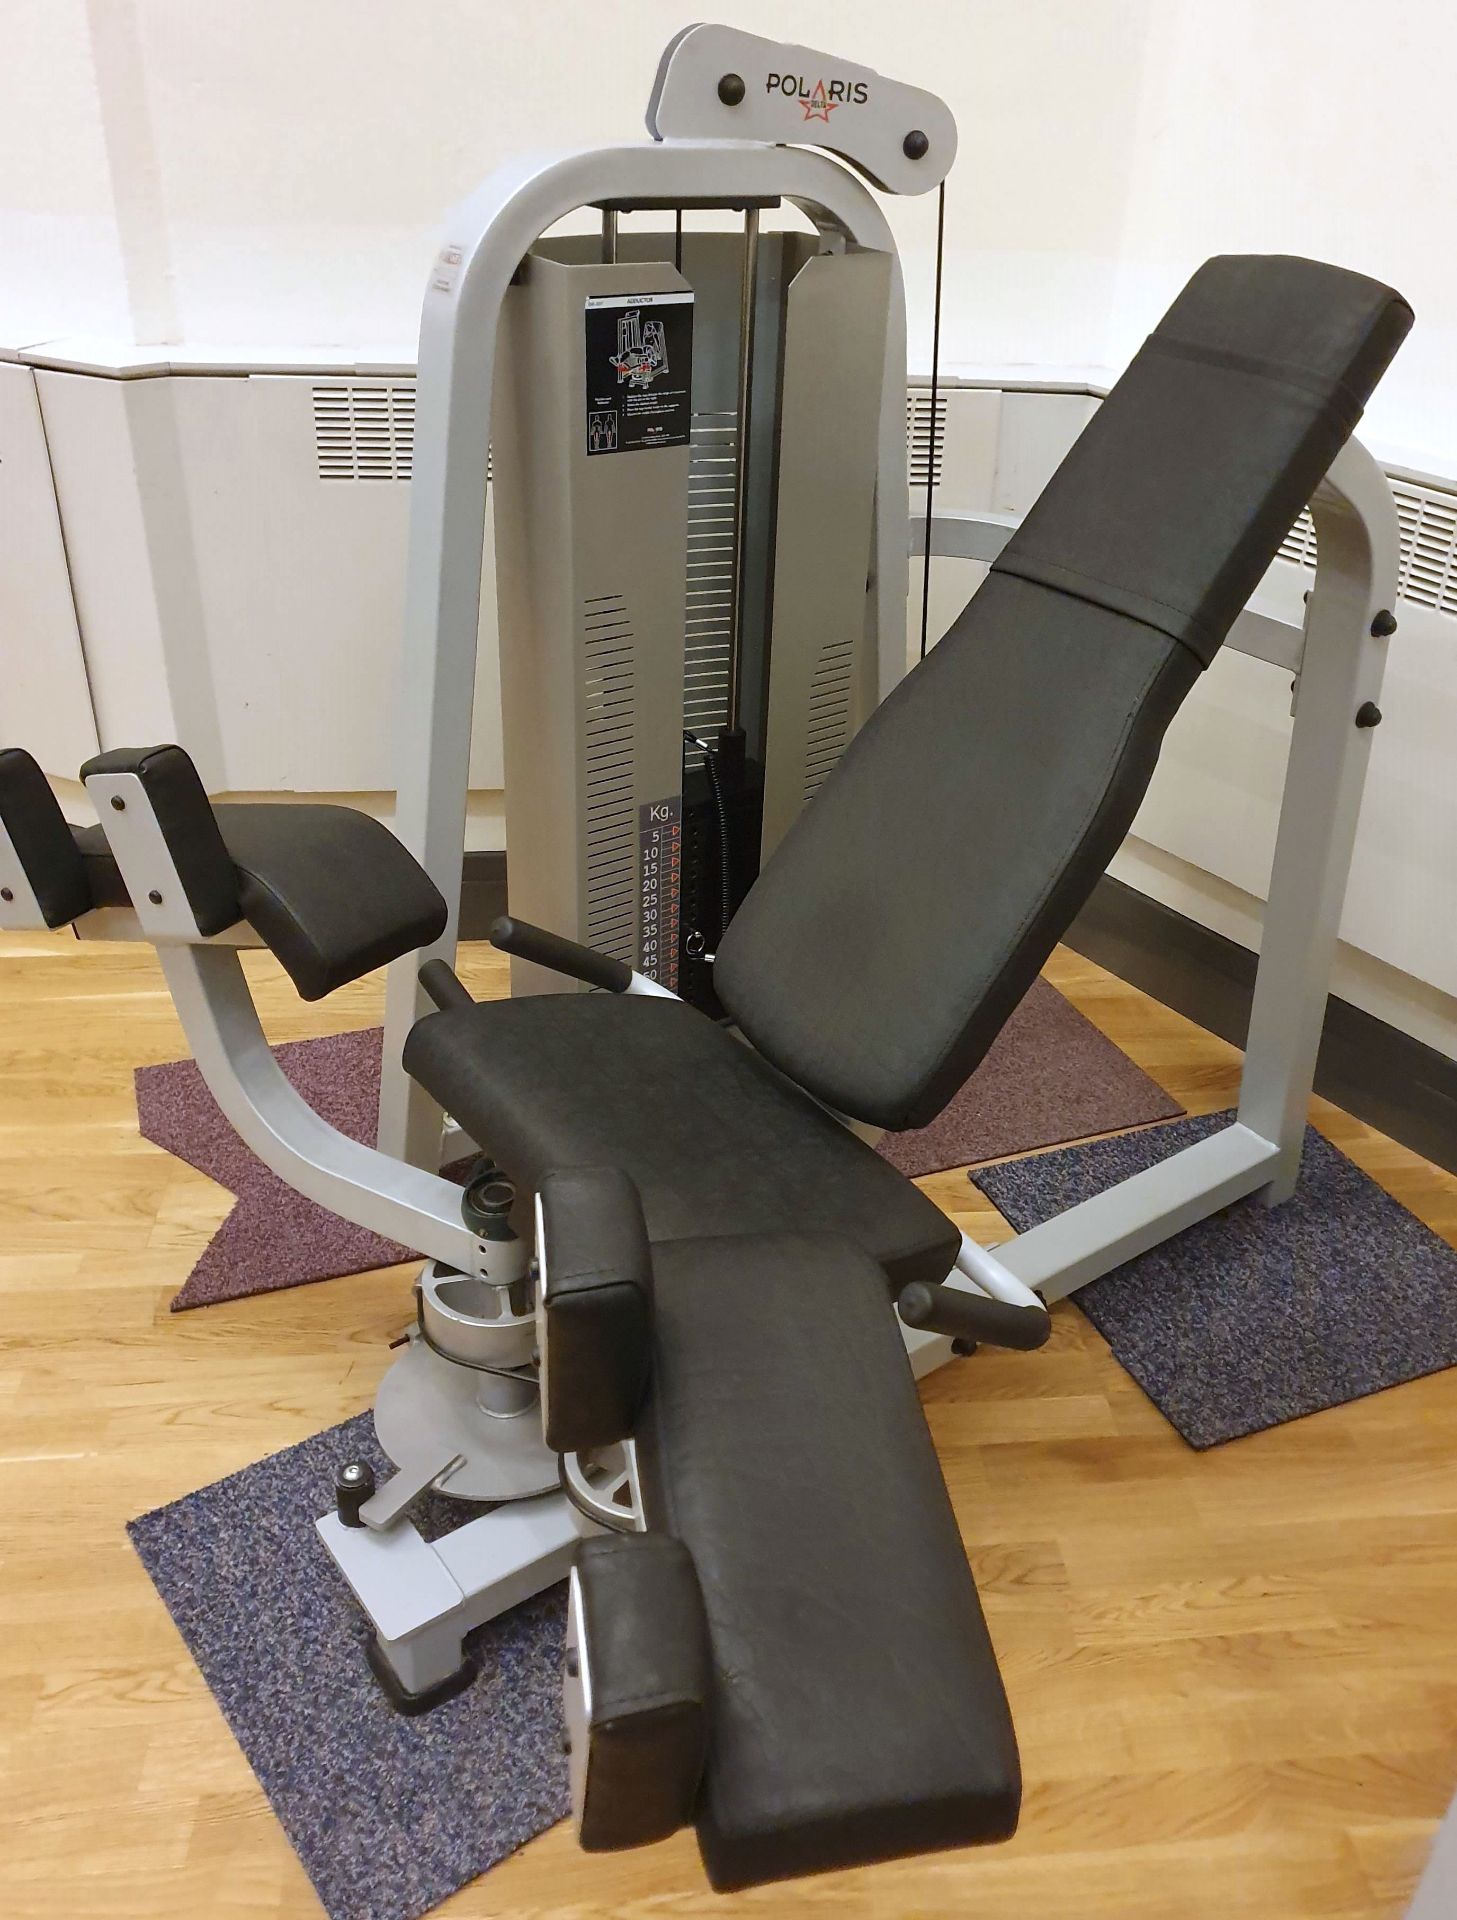 1 x Polaris DE-207 Abductor Gym Machine - CL552 - Location: Altrincham WA14